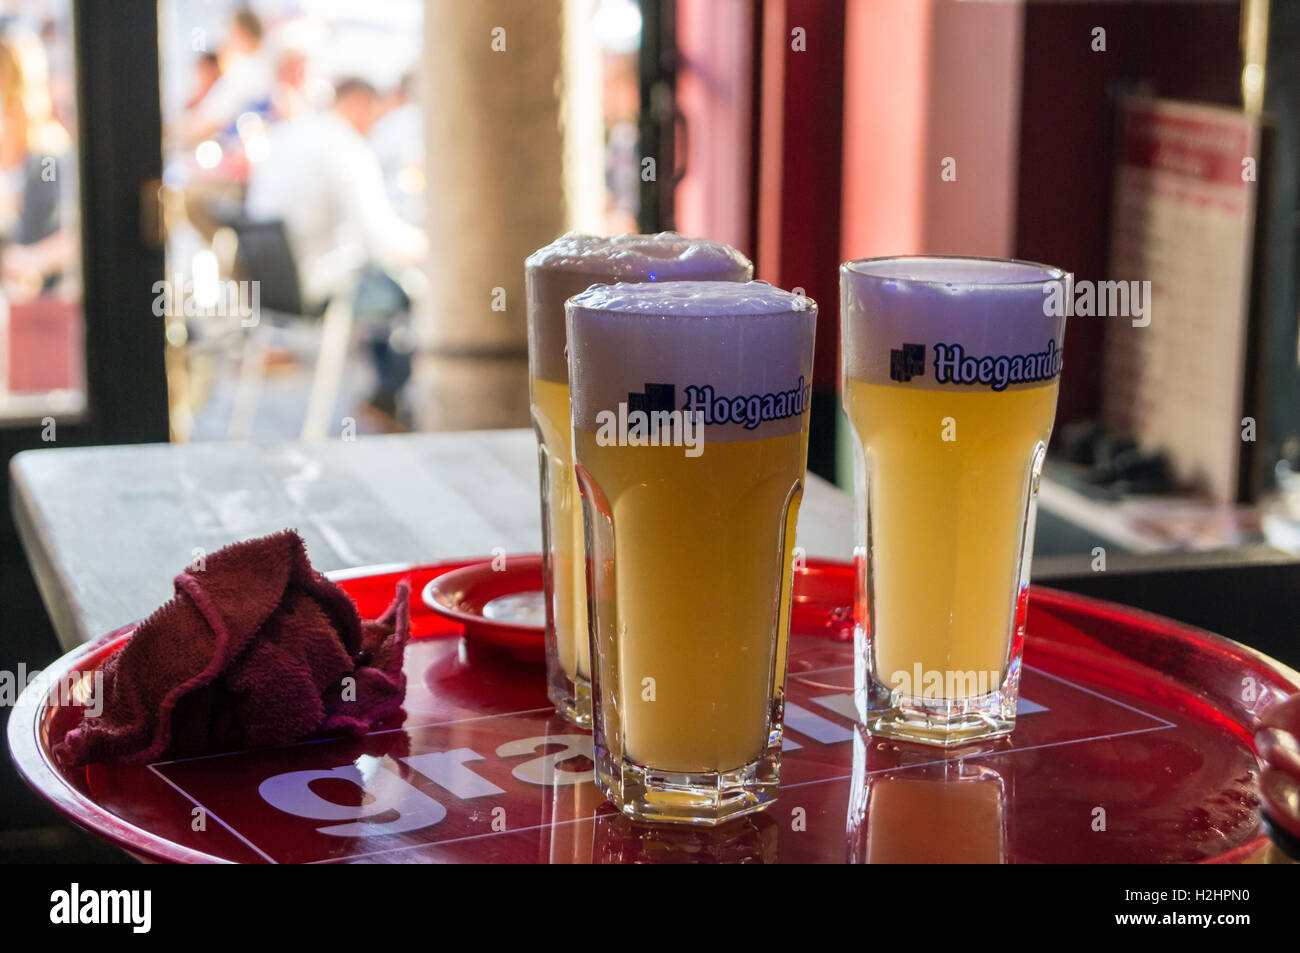 Tre Bicchieri di Hoegaarden belga della birra di grano su un vassoio, Couleur Café bar, Place des Héros, Arras, Pas-de-Calais, Hauts de France, Francia Foto Stock